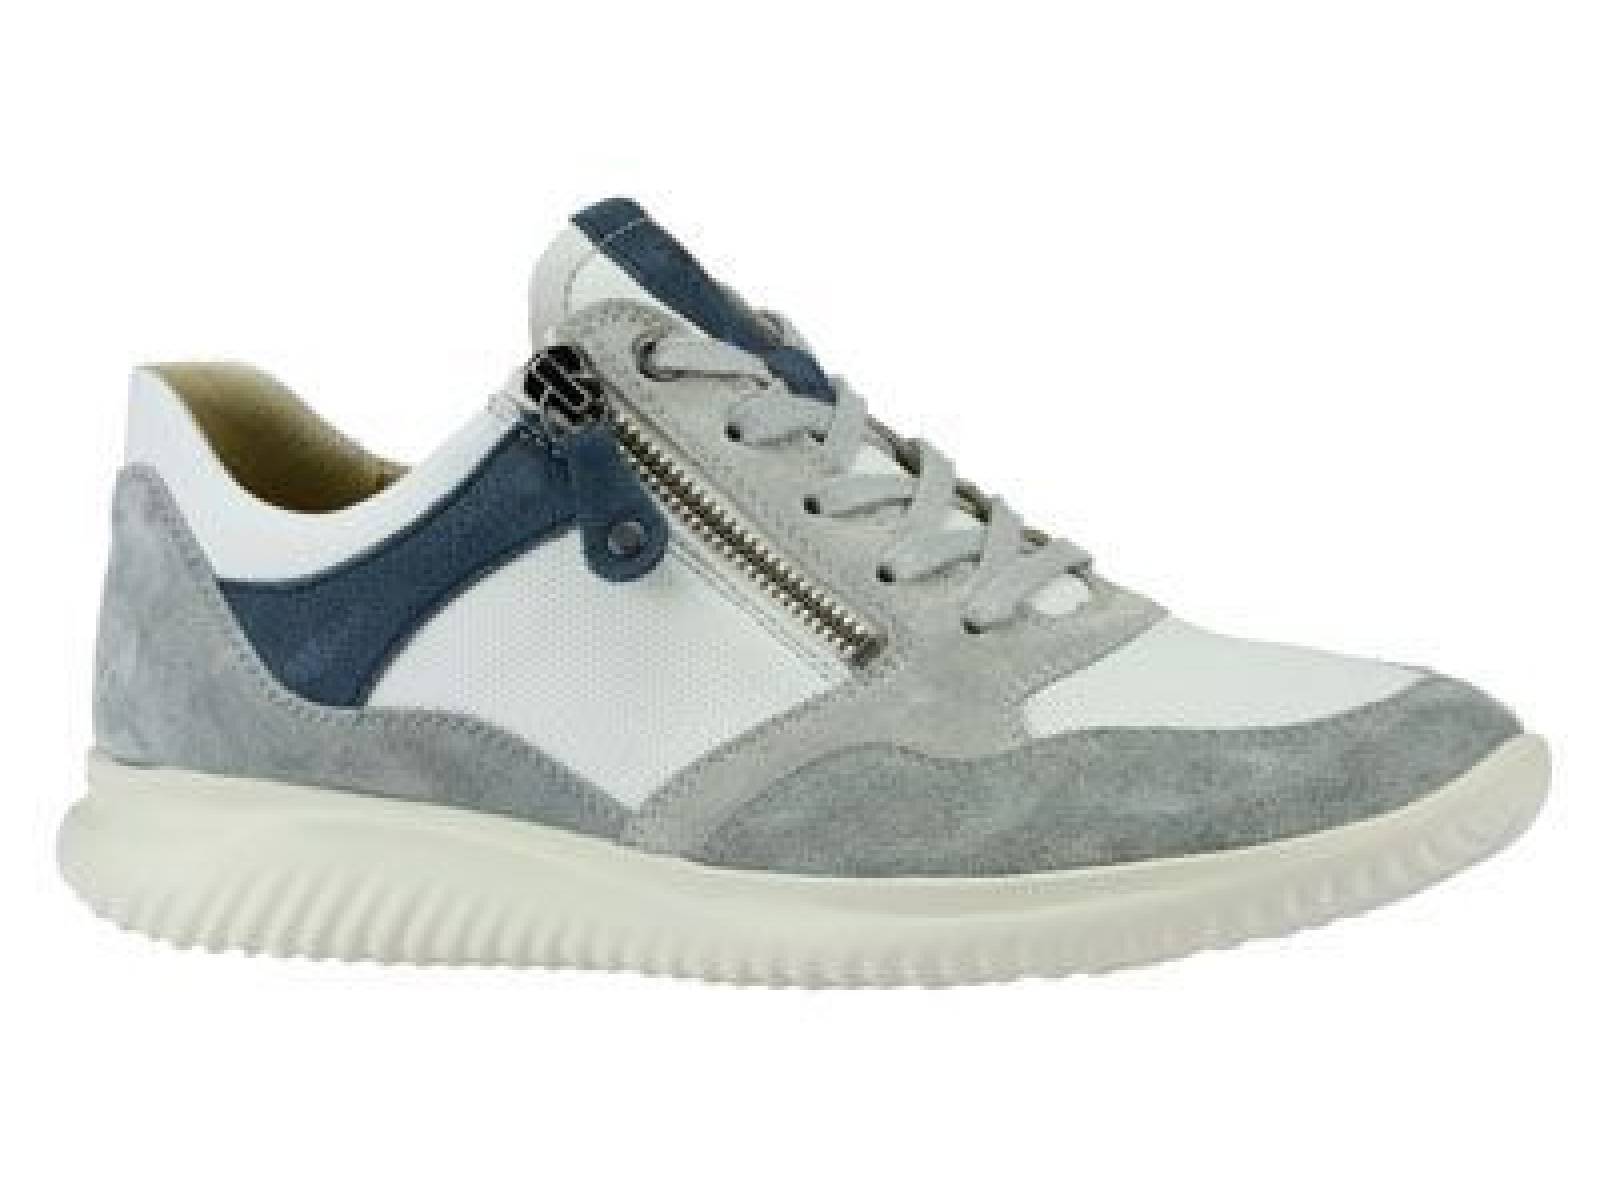 Breeze shoe lage damesschoen velour-nappa aluminium-eisgrau162.1140/31 19.17 Hartjes Lage schoenen dames te koop in